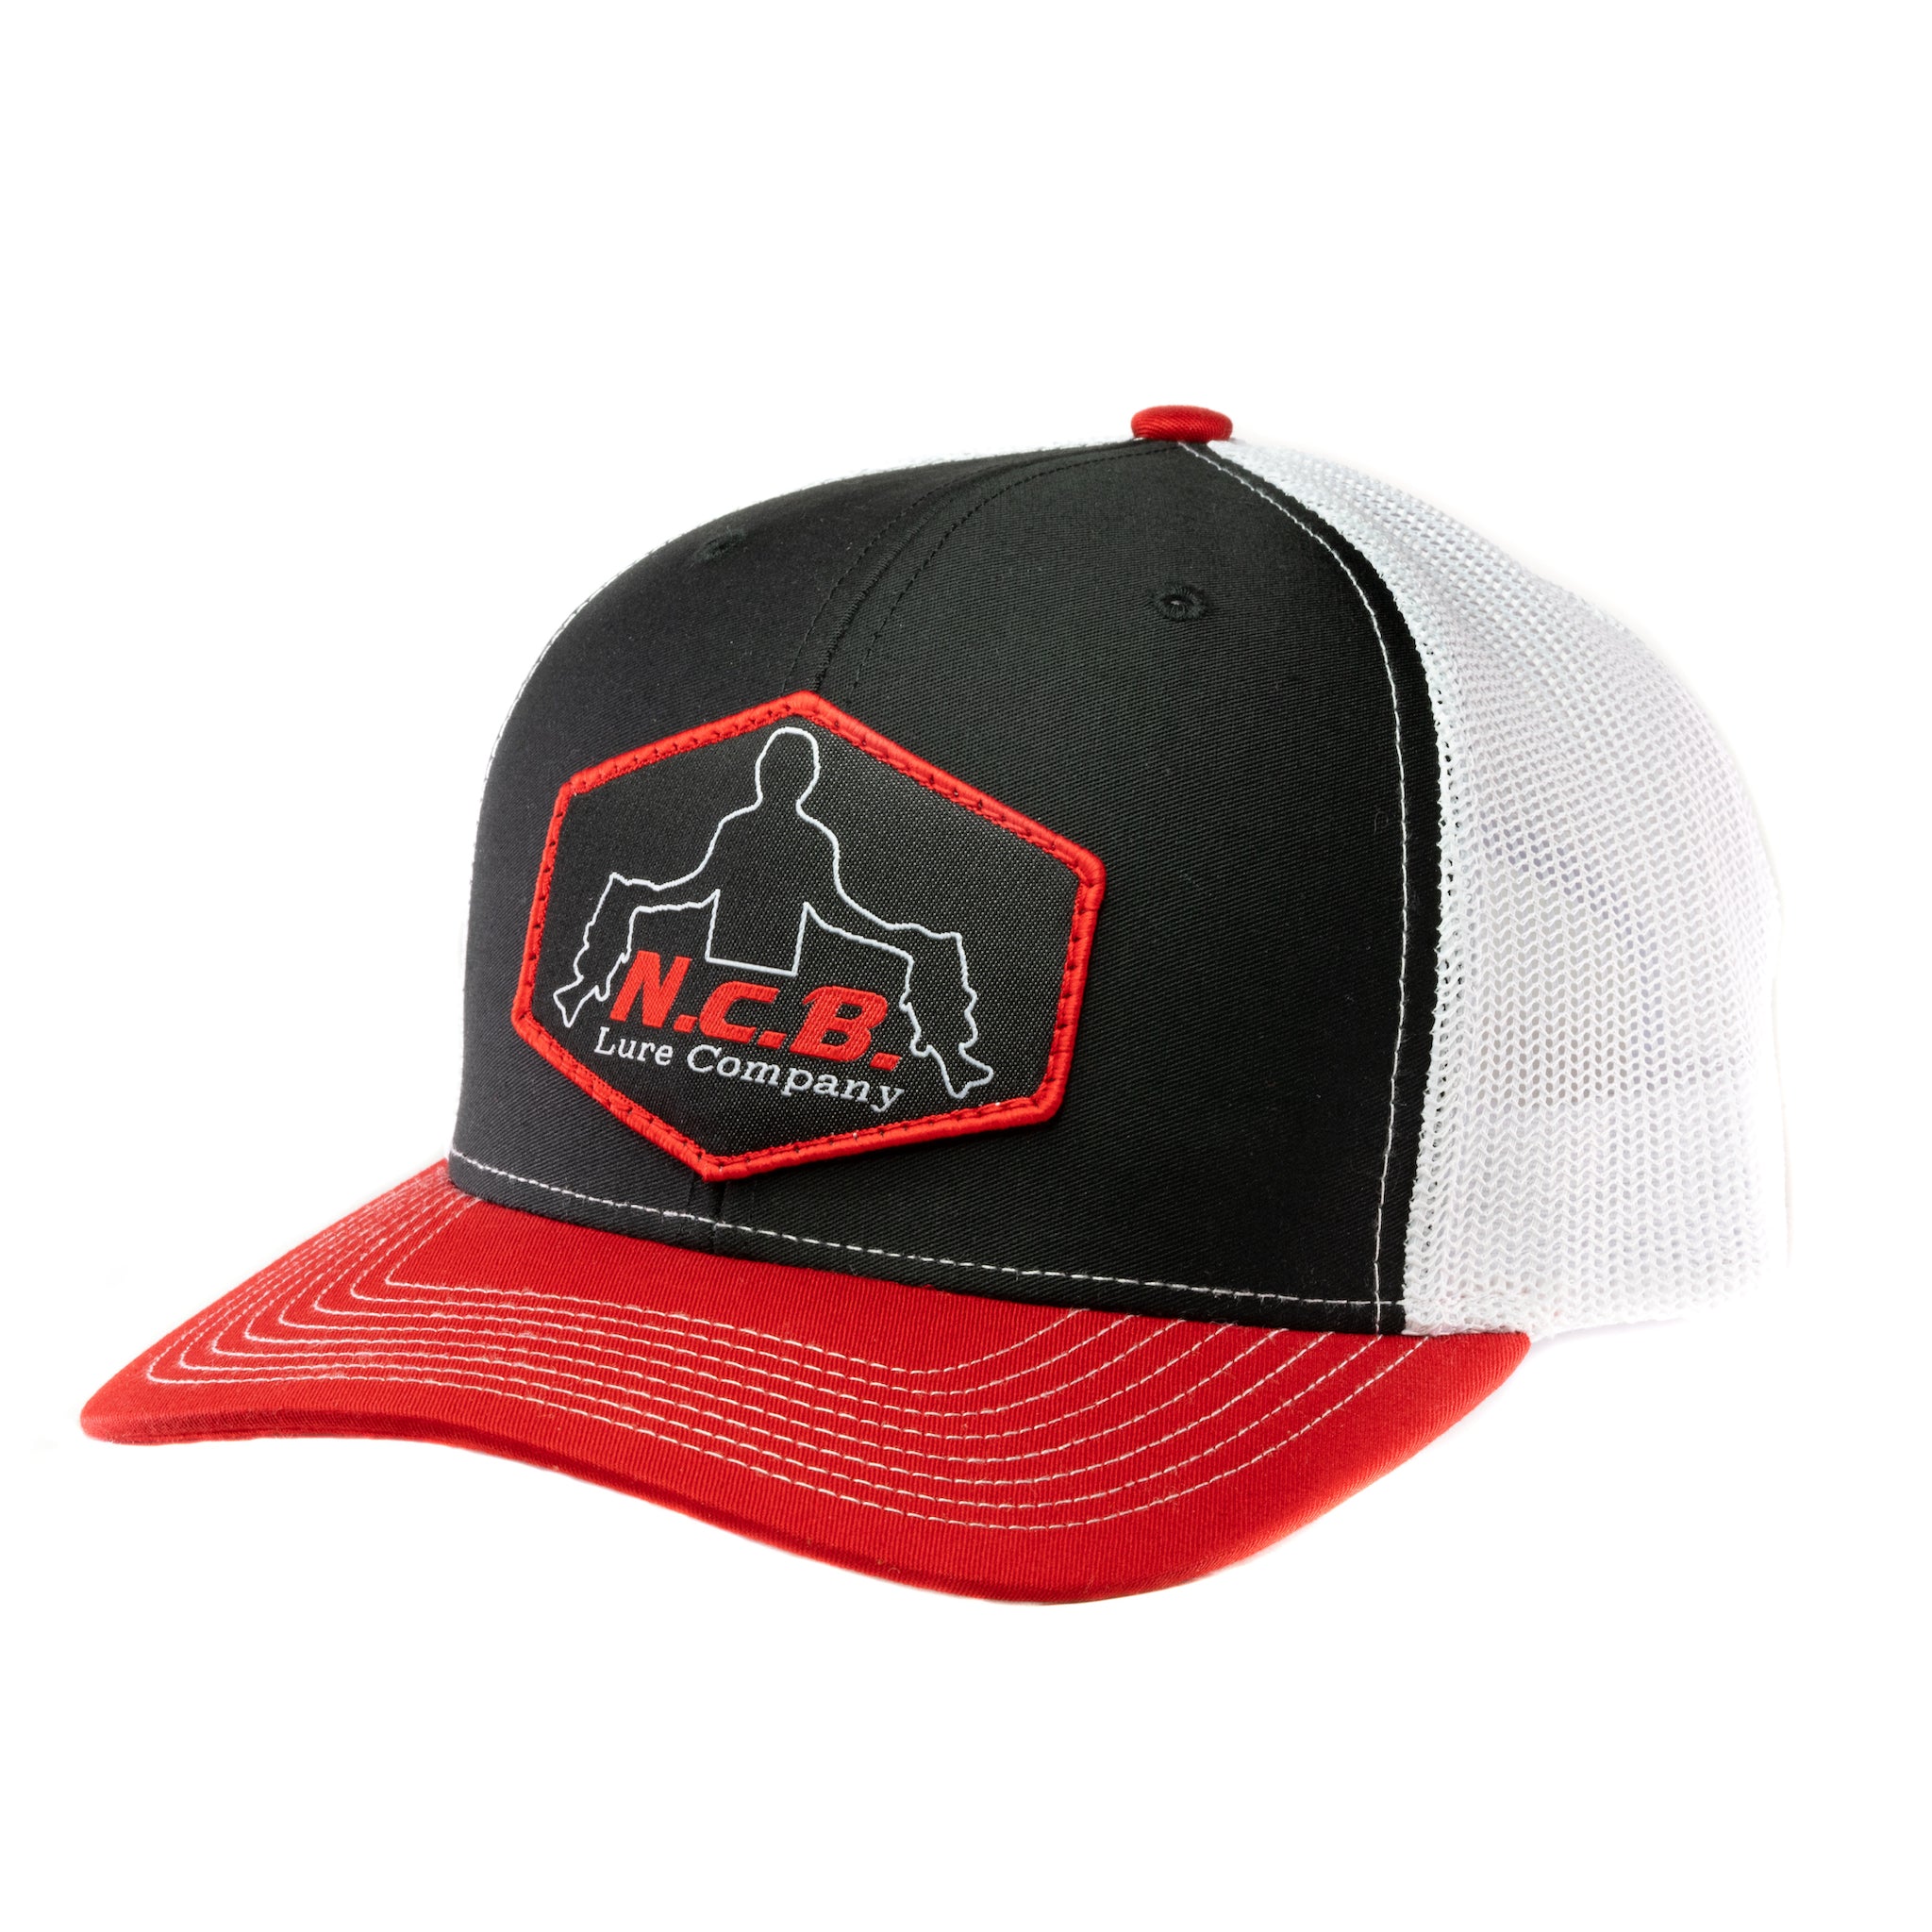 RedBeard Snapback Hat Black on White